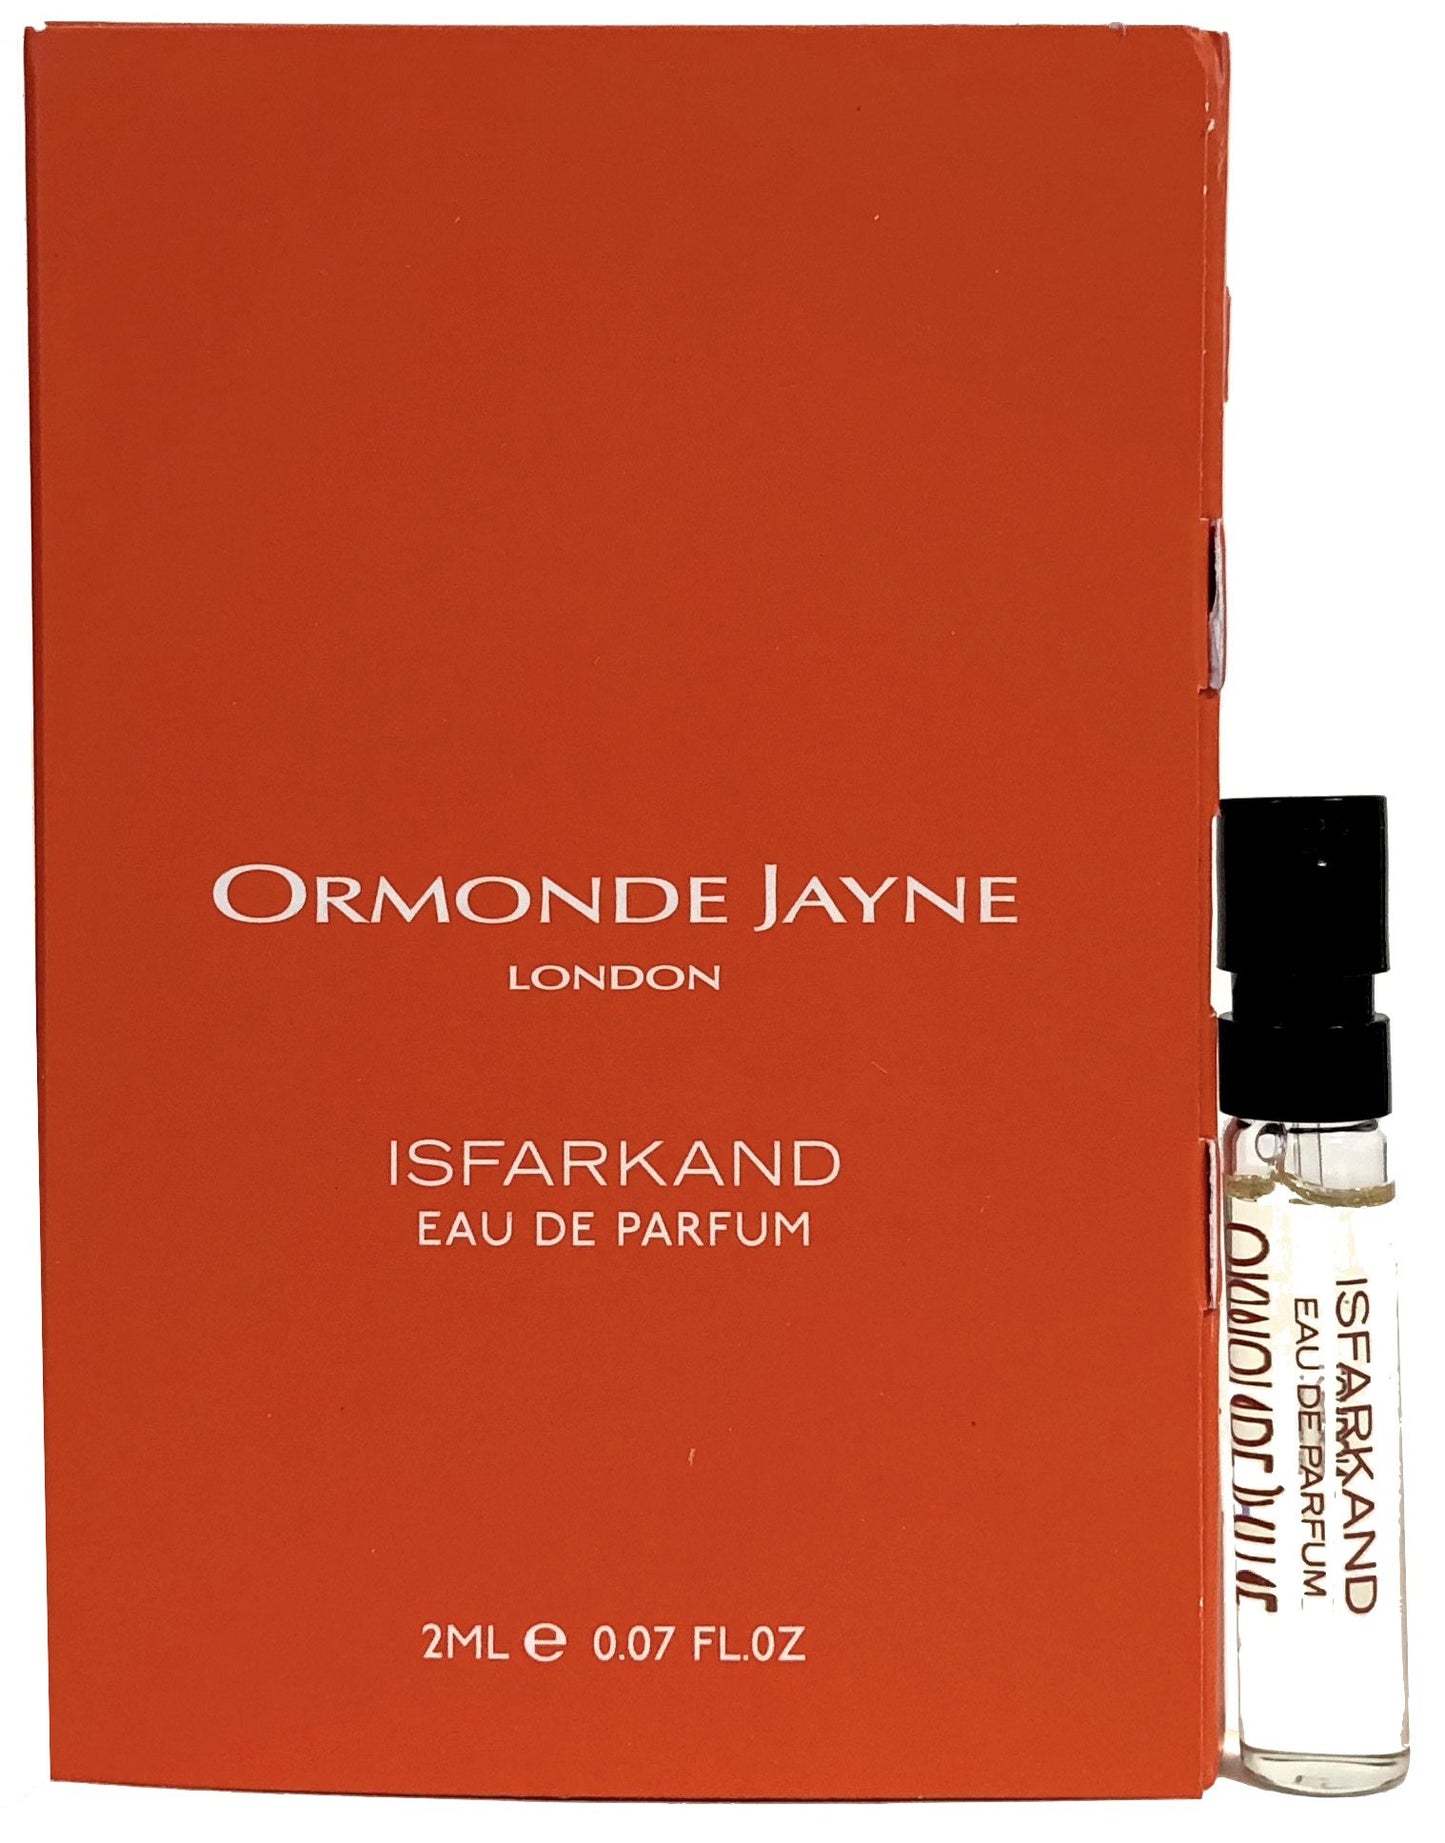 Ormonde Jayne Isfarkand 2ml échantillons de parfum officiels